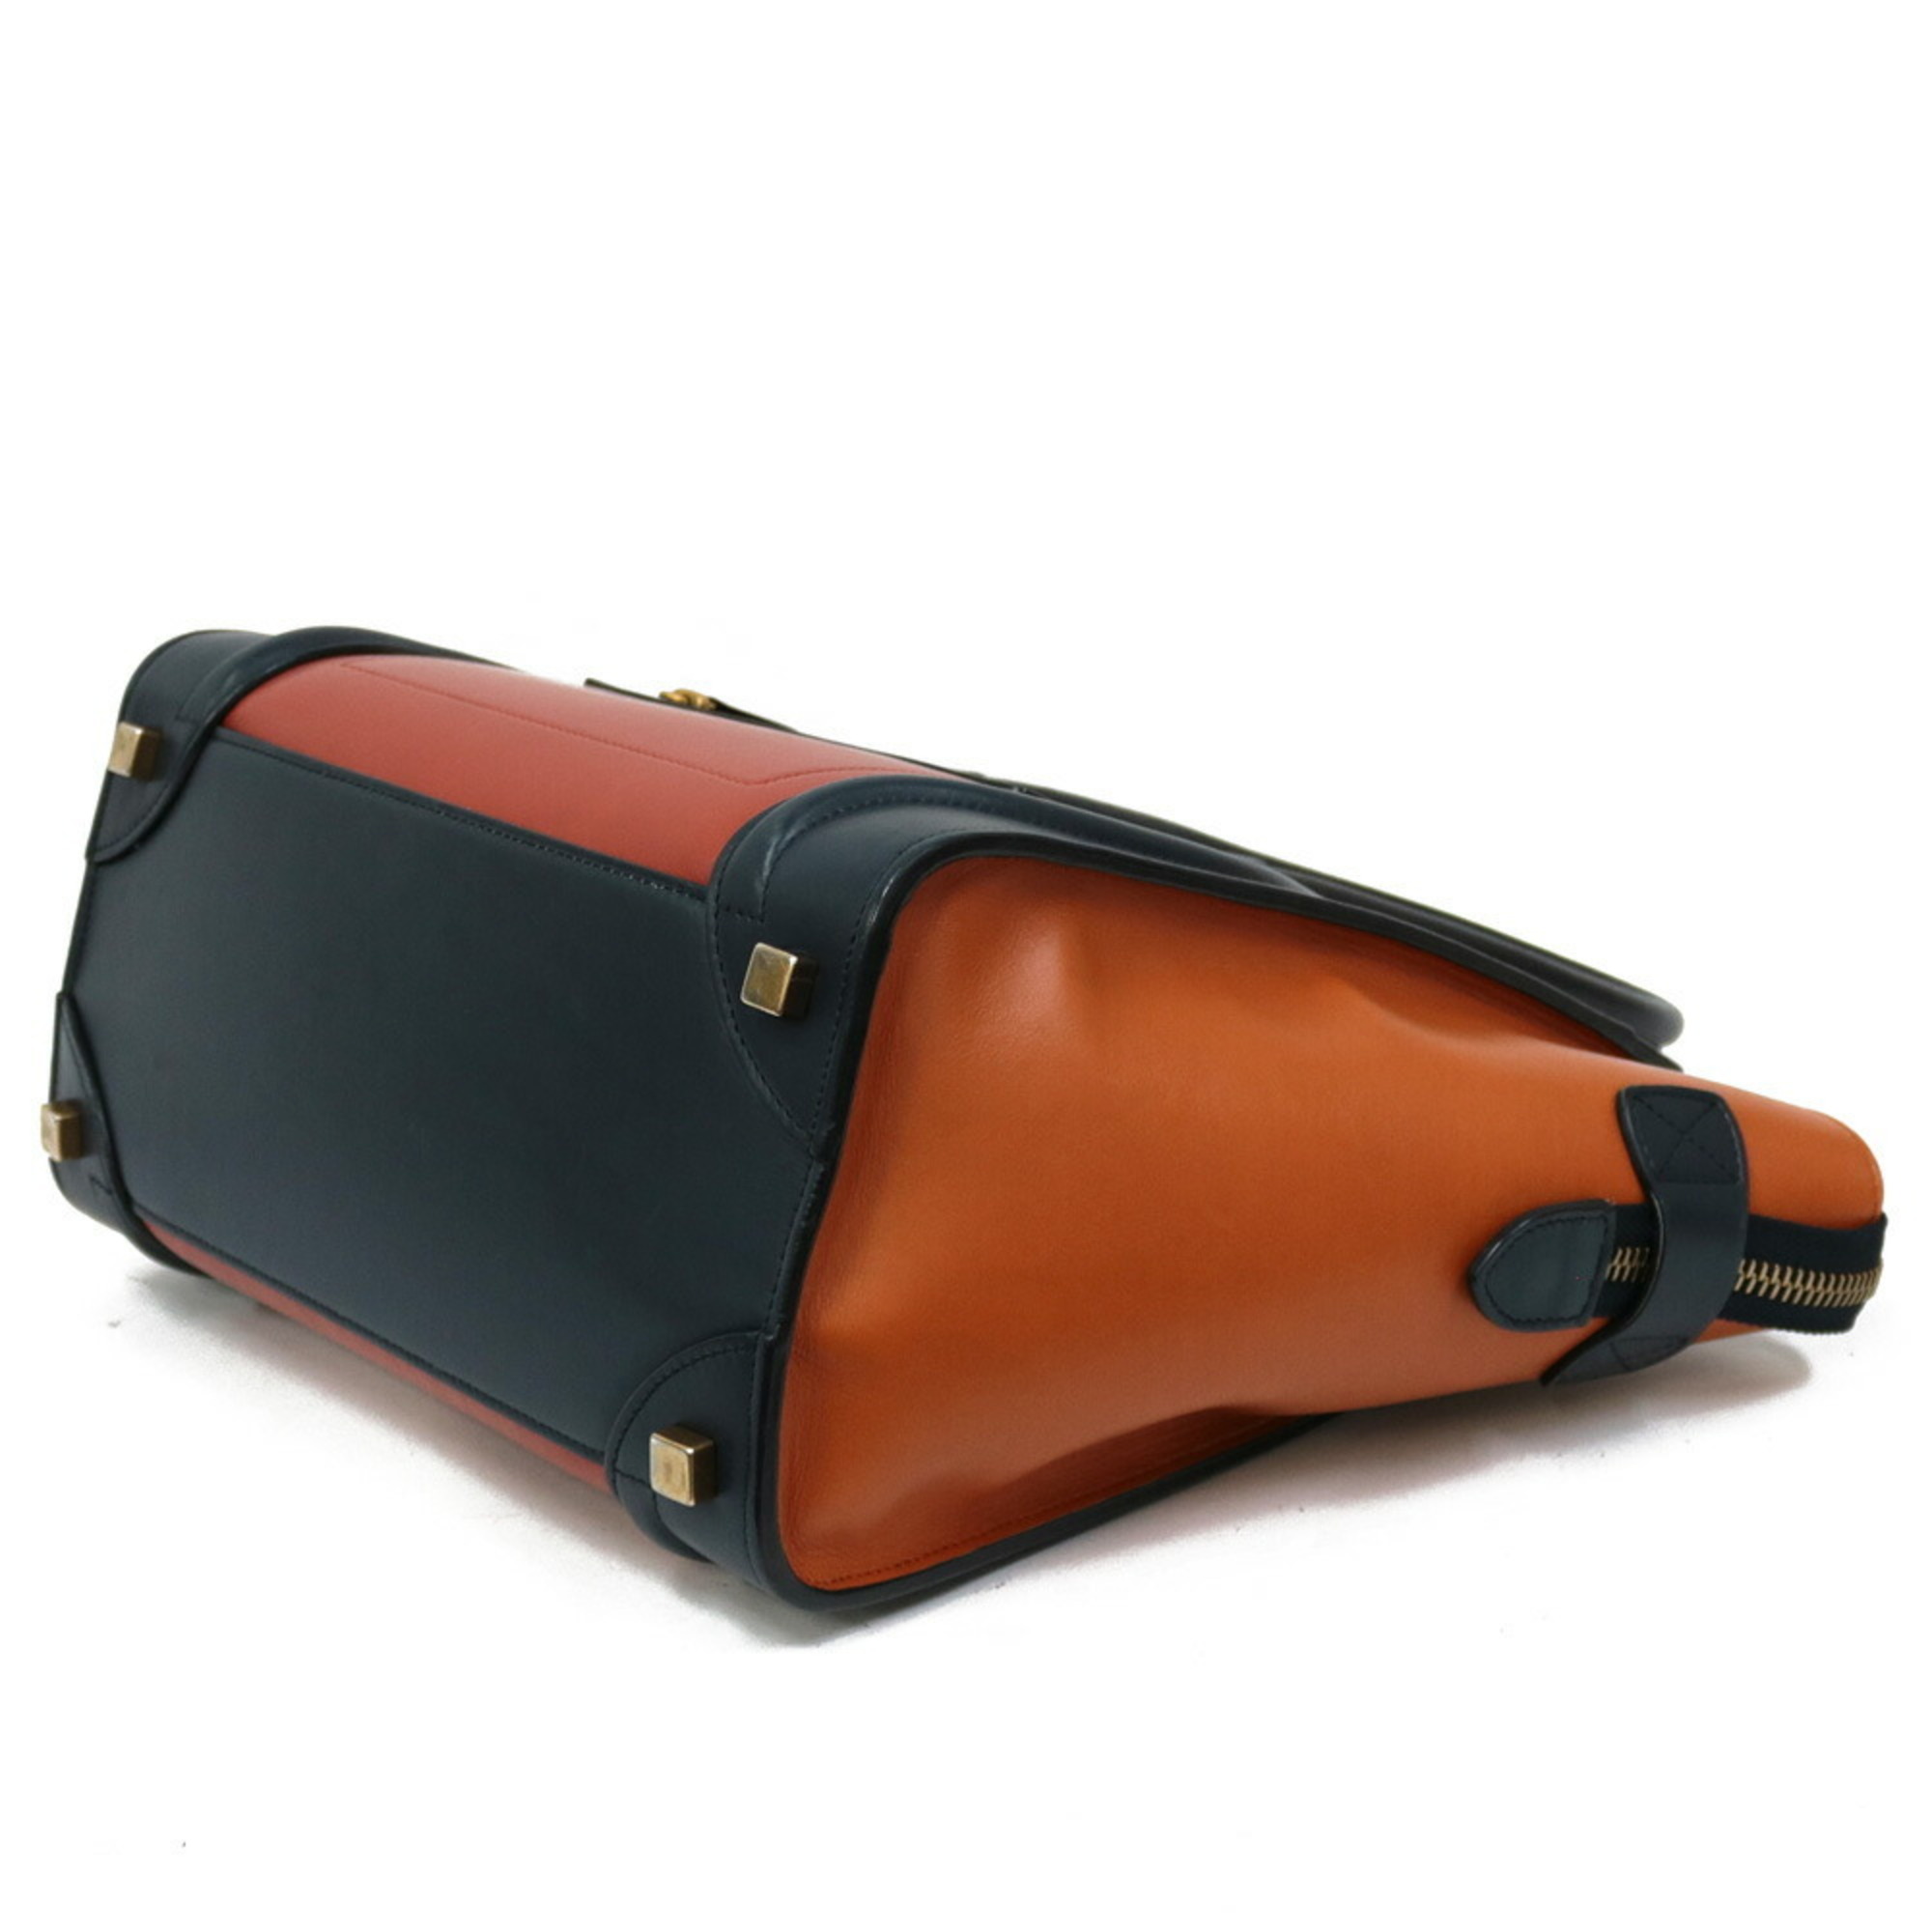 CELINE Celine Handbag Luggage Micro Shopper Multicolor Orange Ladies